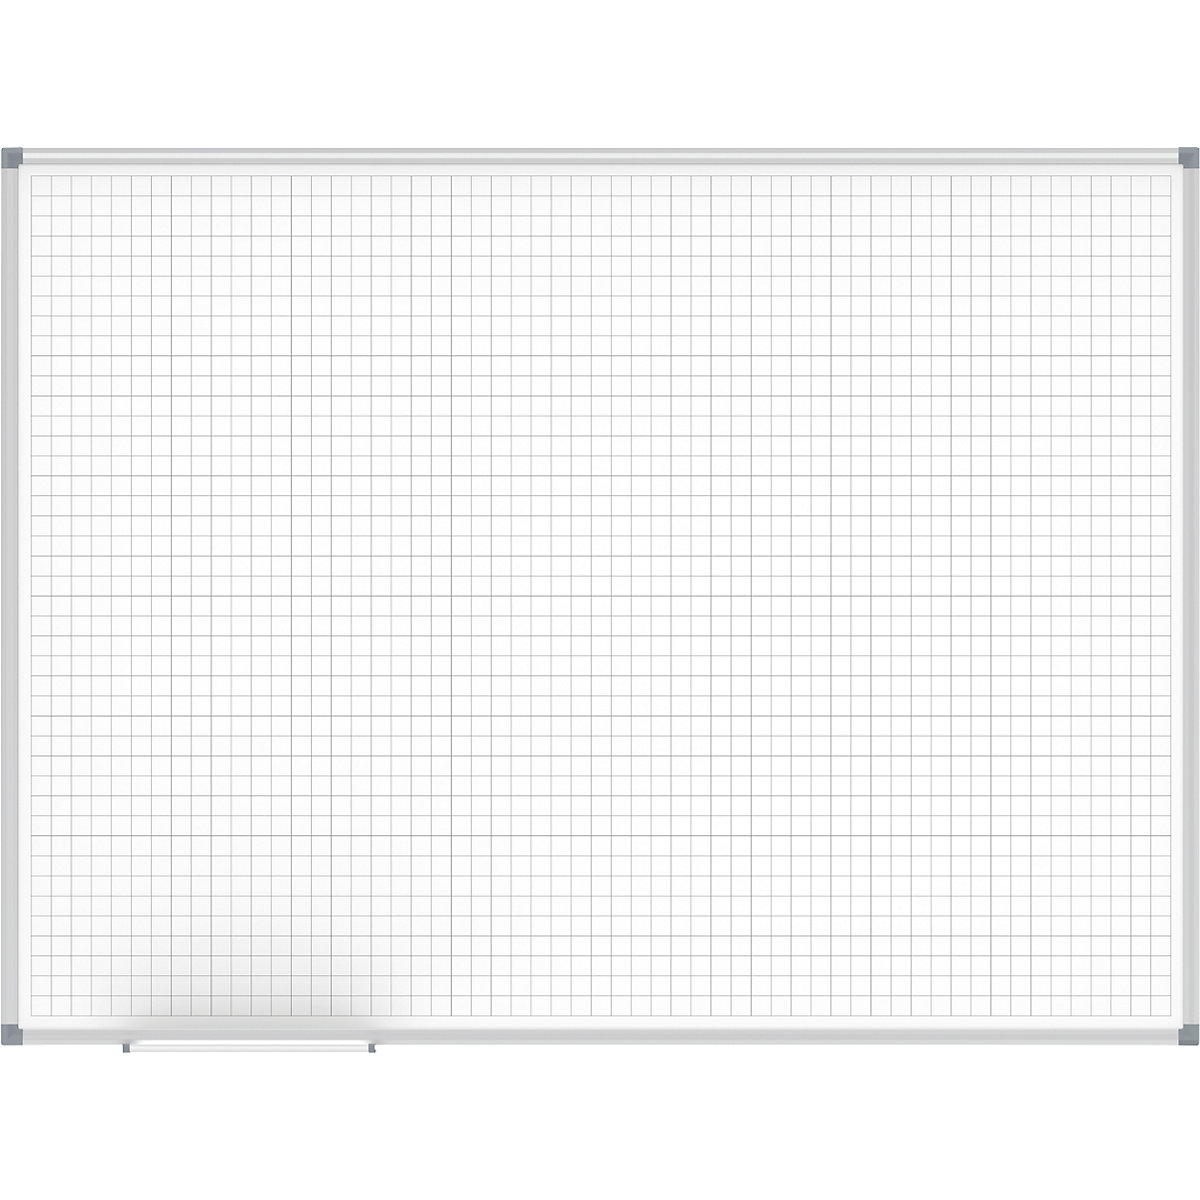 MAULstandard grid board, white – MAUL, grid 20 x 20 mm, WxH 1200 x 900 mm-1